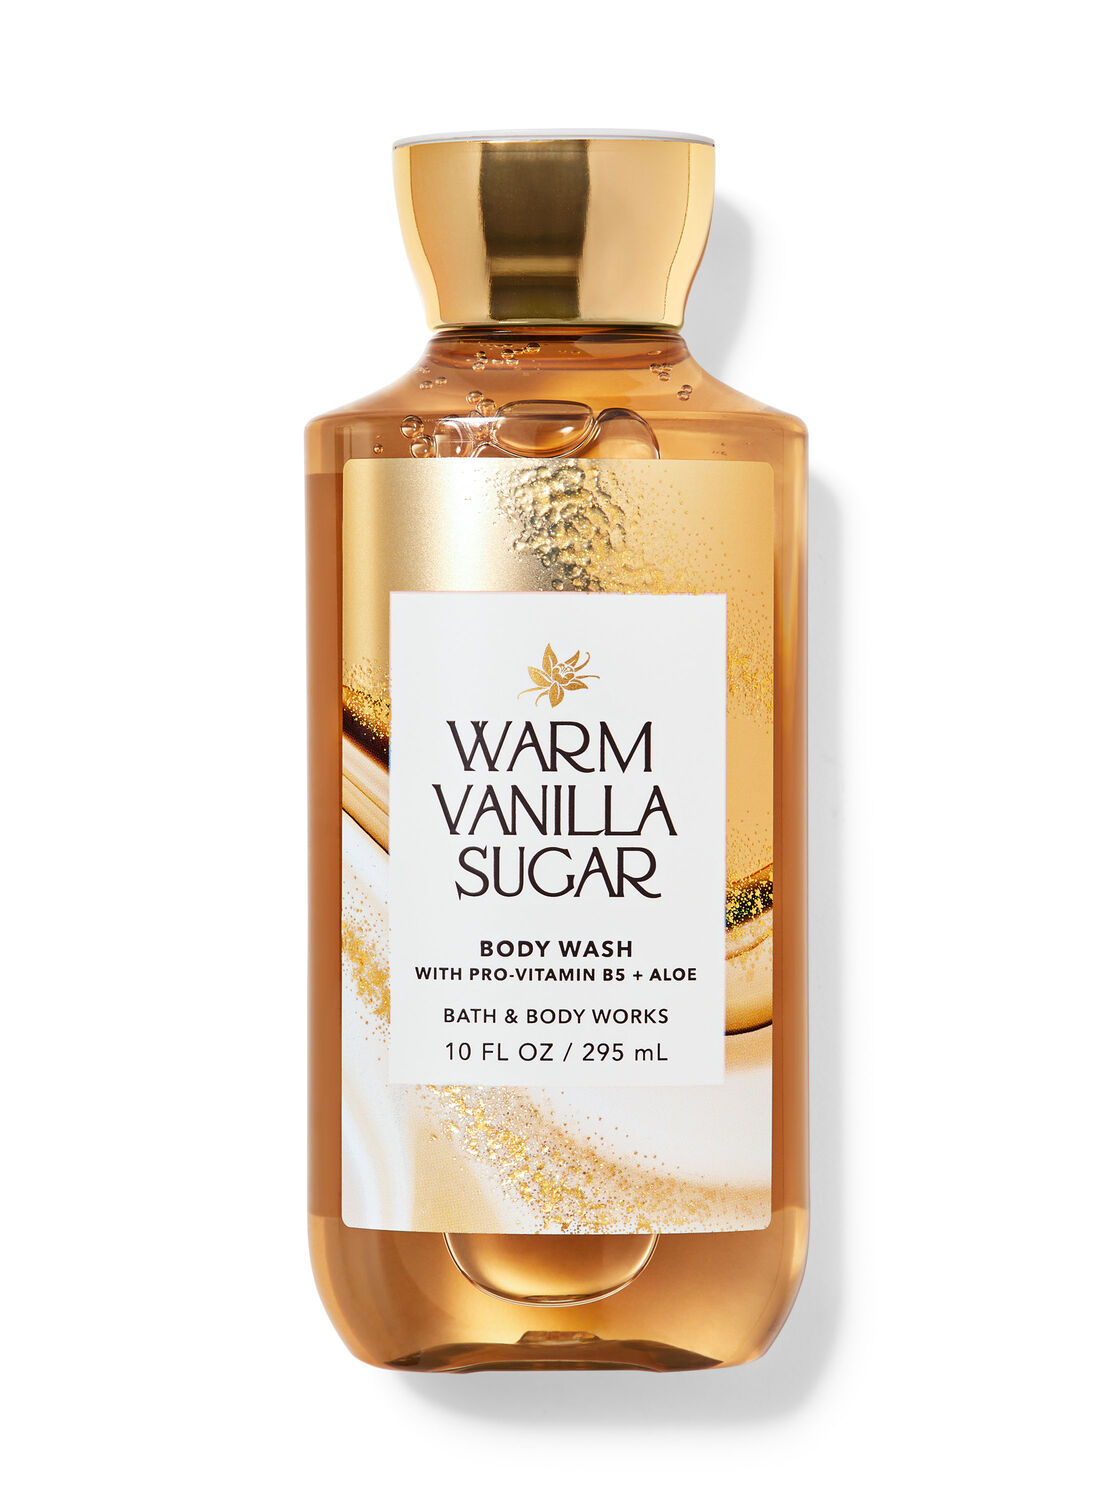 Bath & Body Works Warm Vanilla Sugar Fragrance Mist Review & Pictures